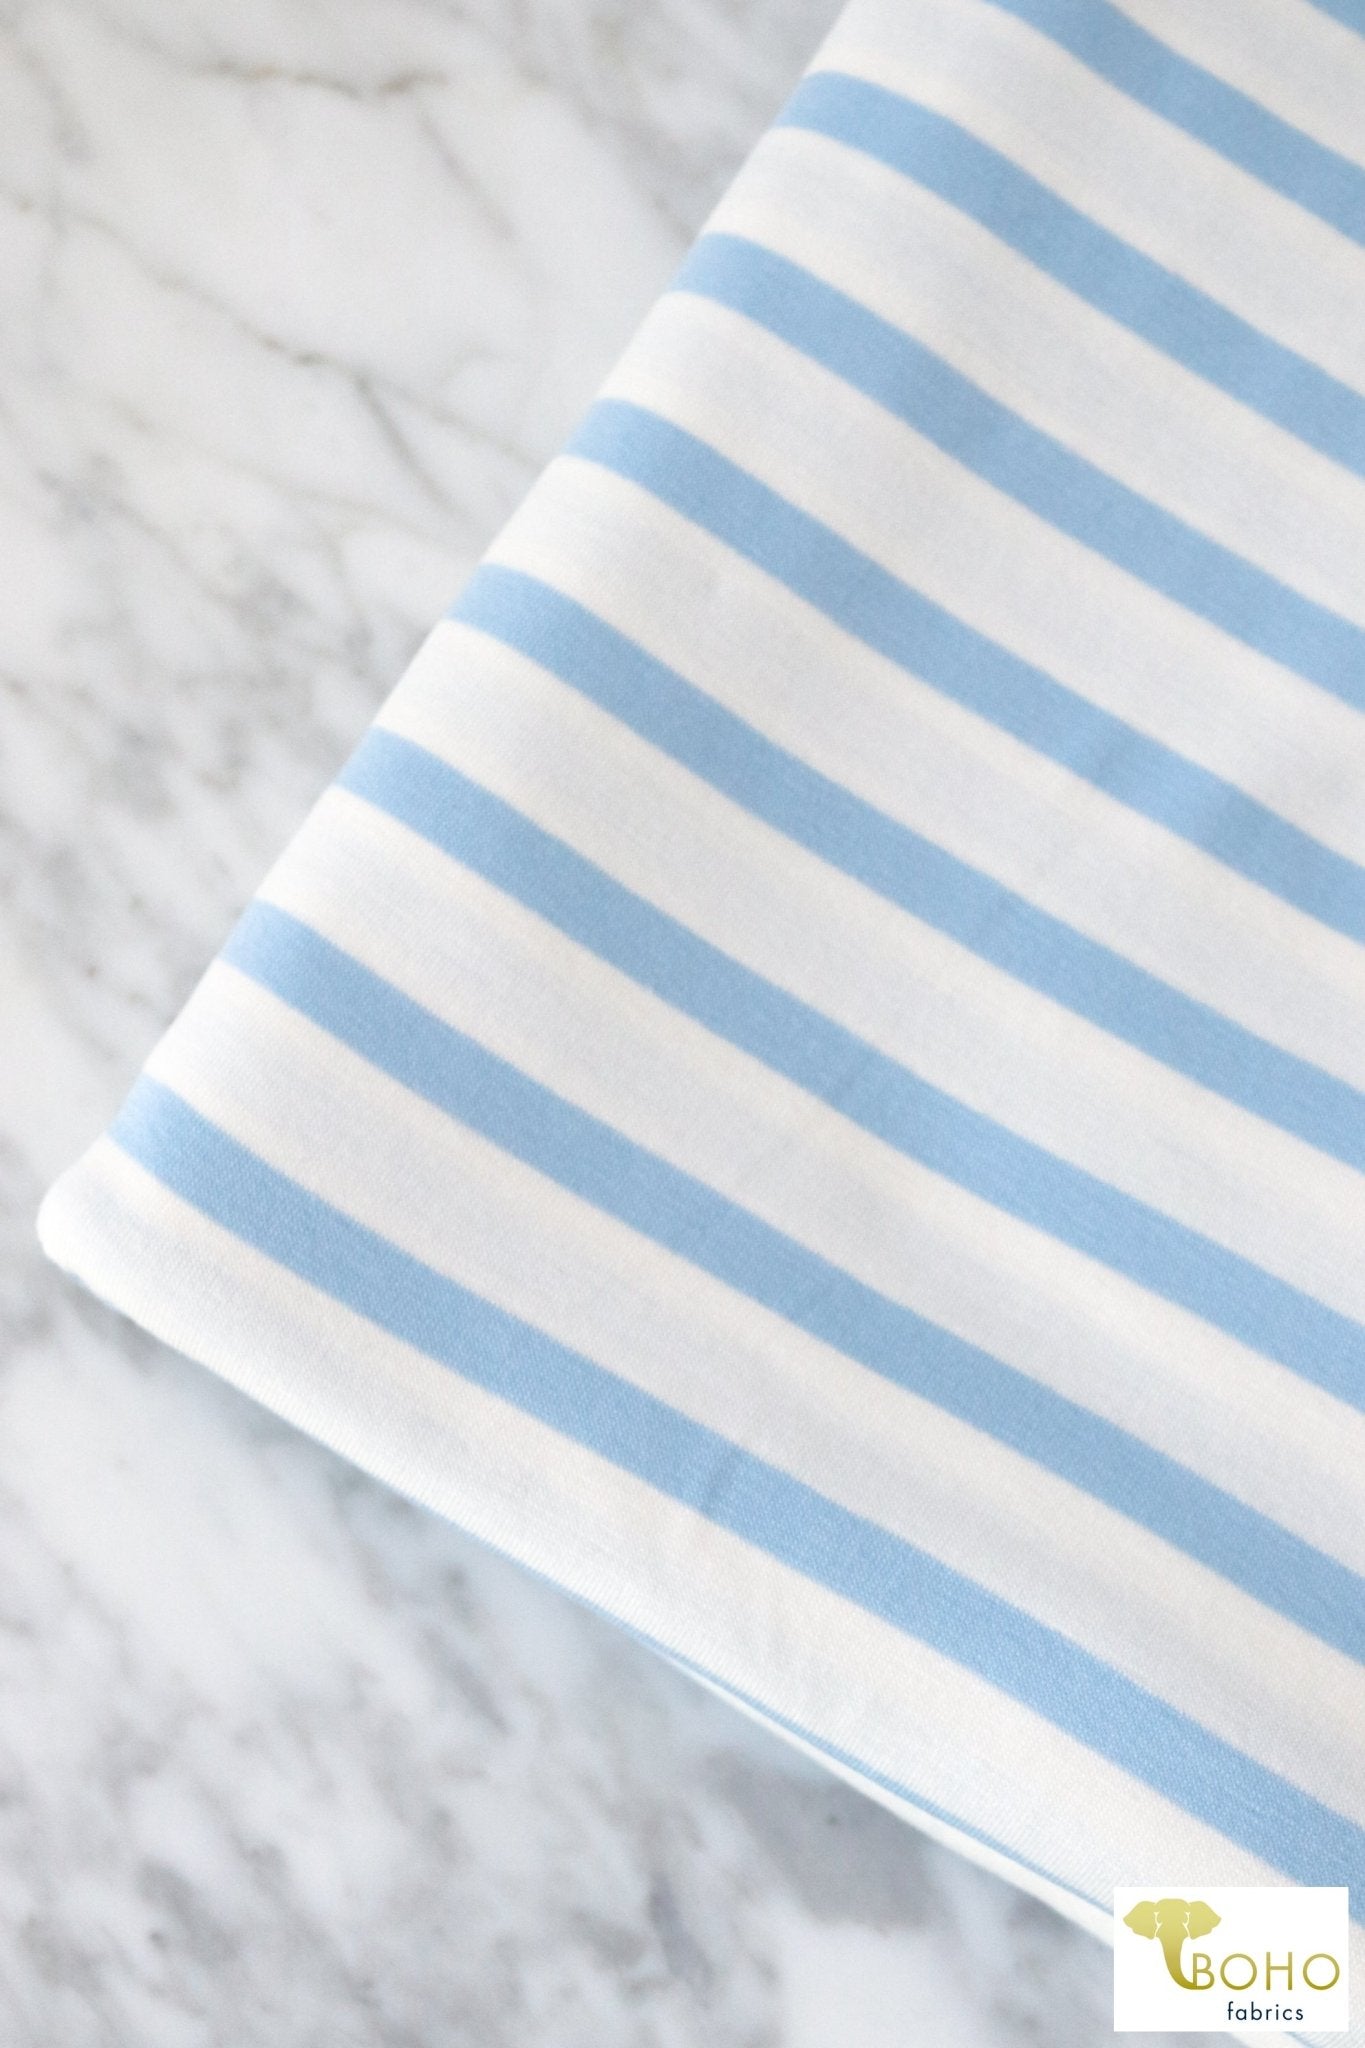 Set-Sail Blue Stripes, Rayon Spandex Print. RJP-305 - Boho Fabrics